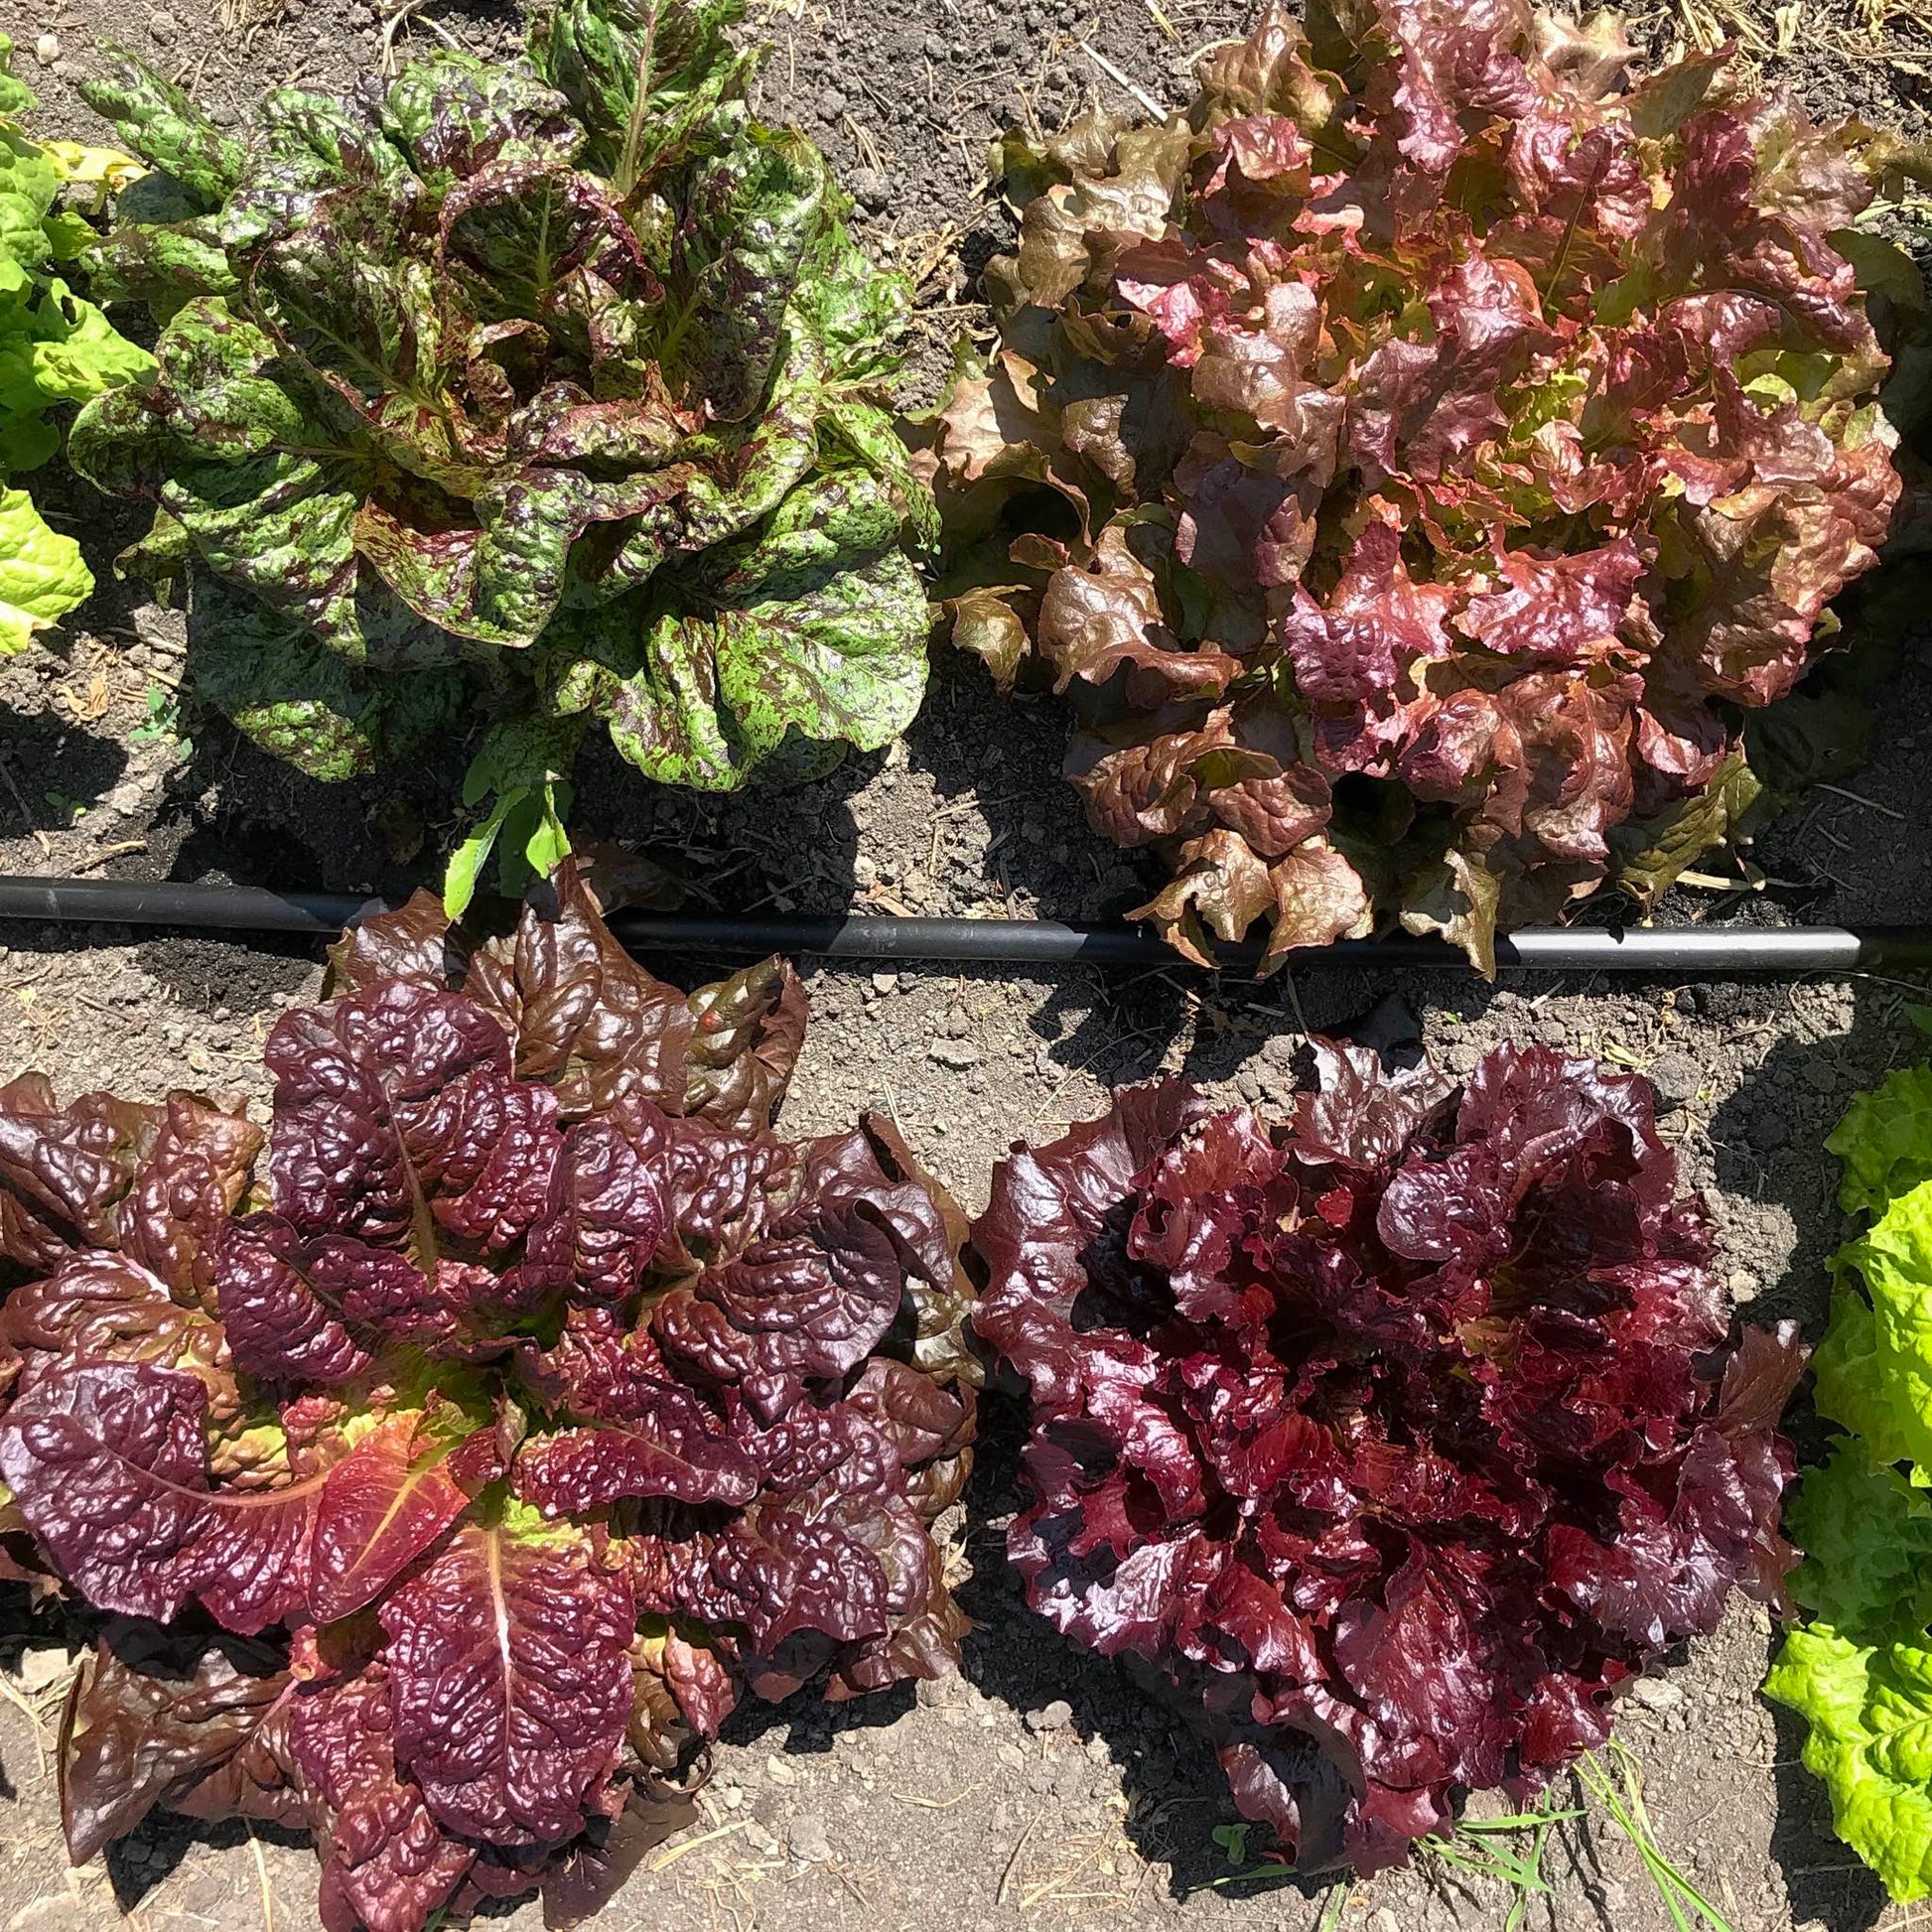 Four delicious looking lettuce plants.